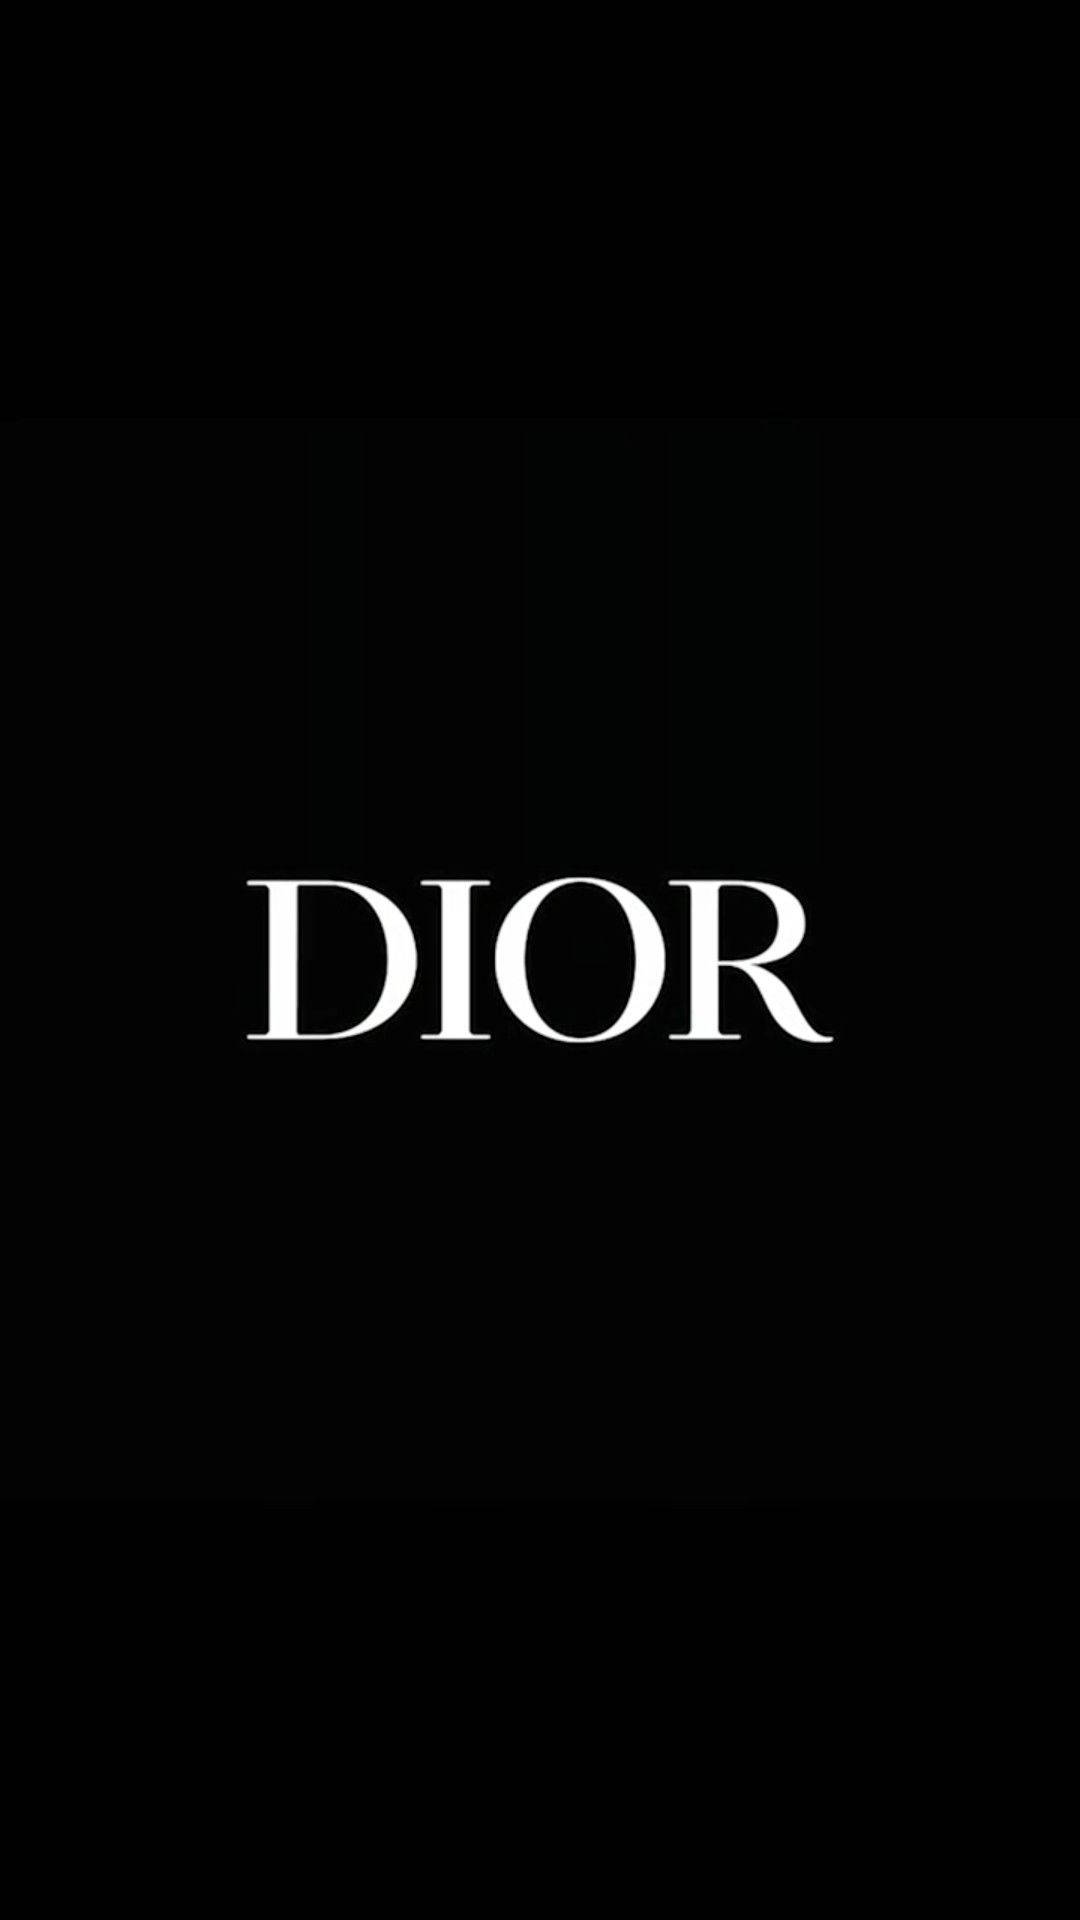 100+] Dior Phone Wallpapers | Wallpapers.com